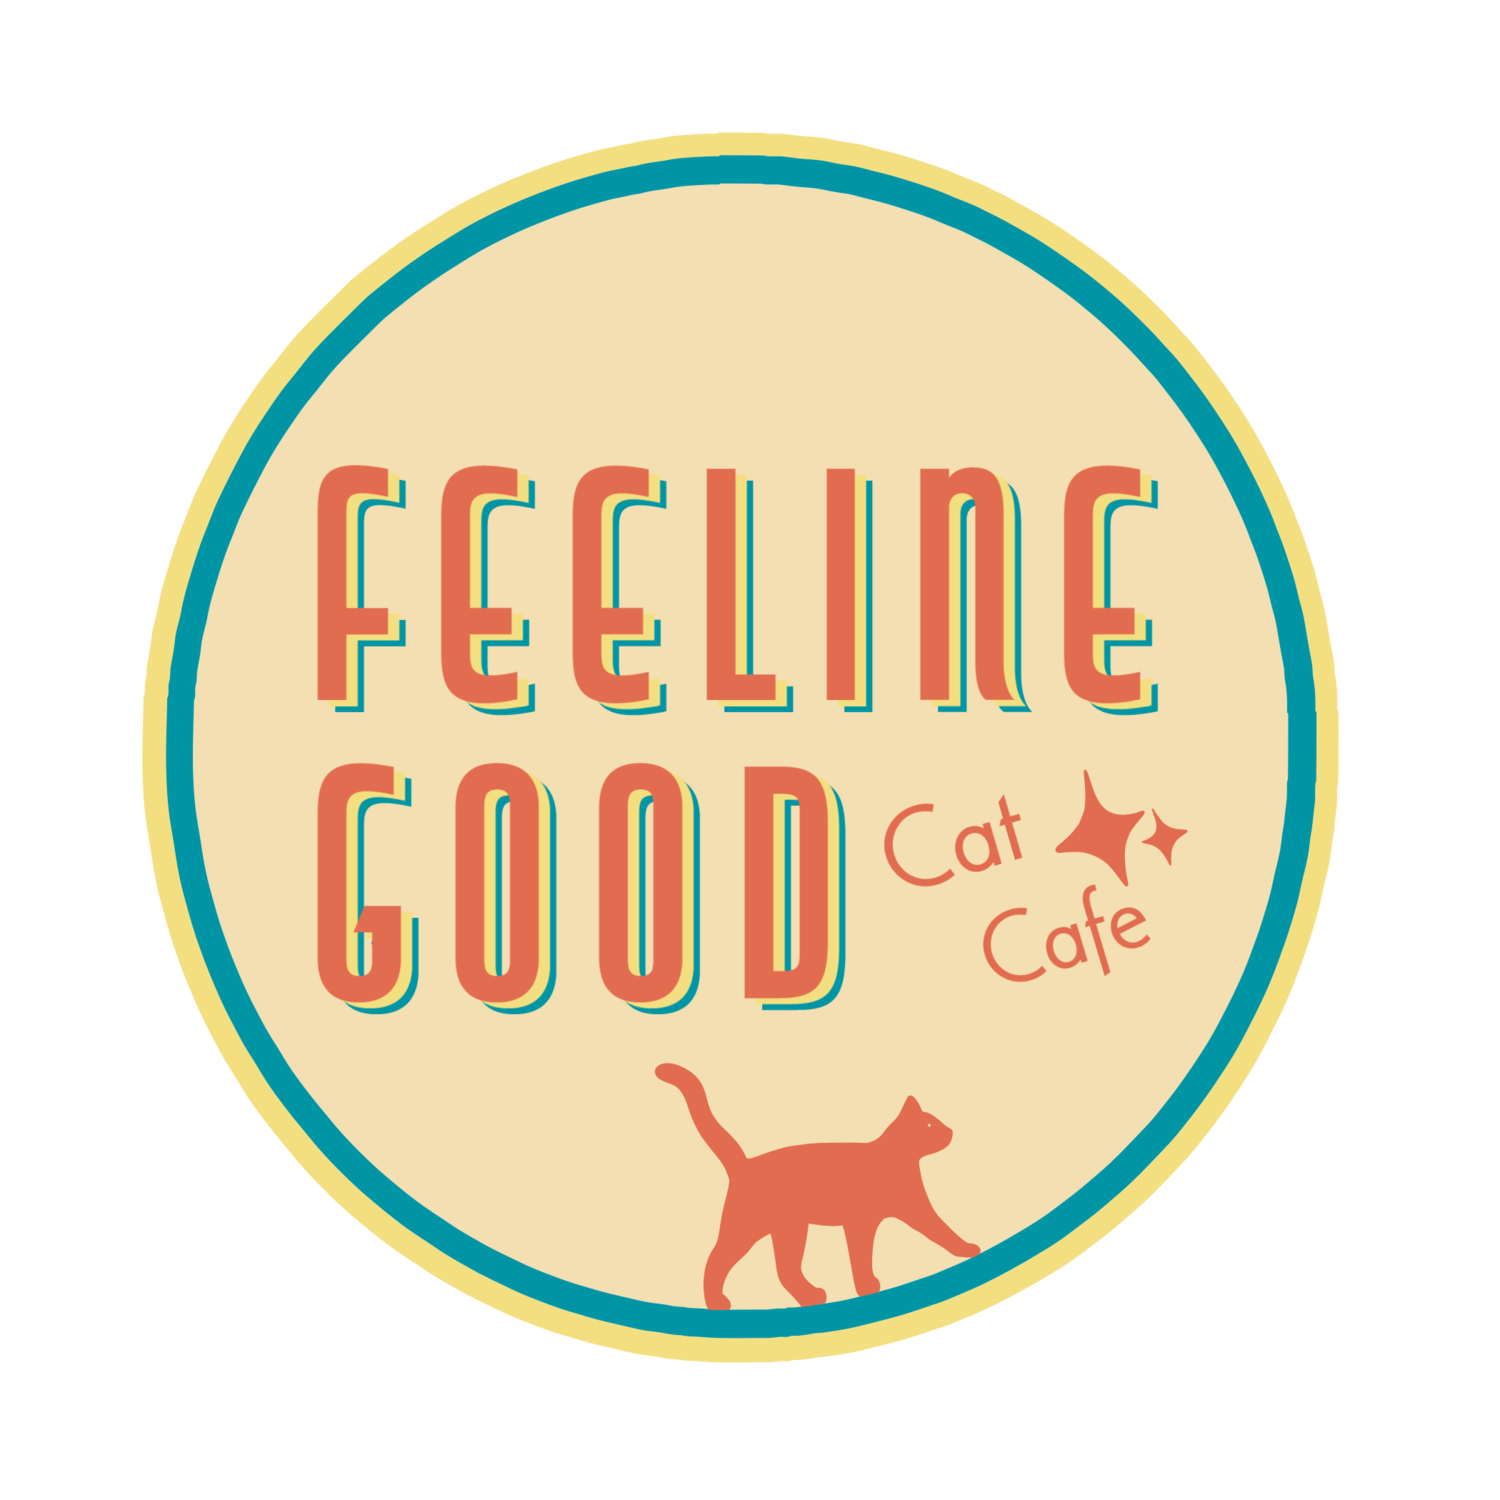 Feeline Good Cat Café